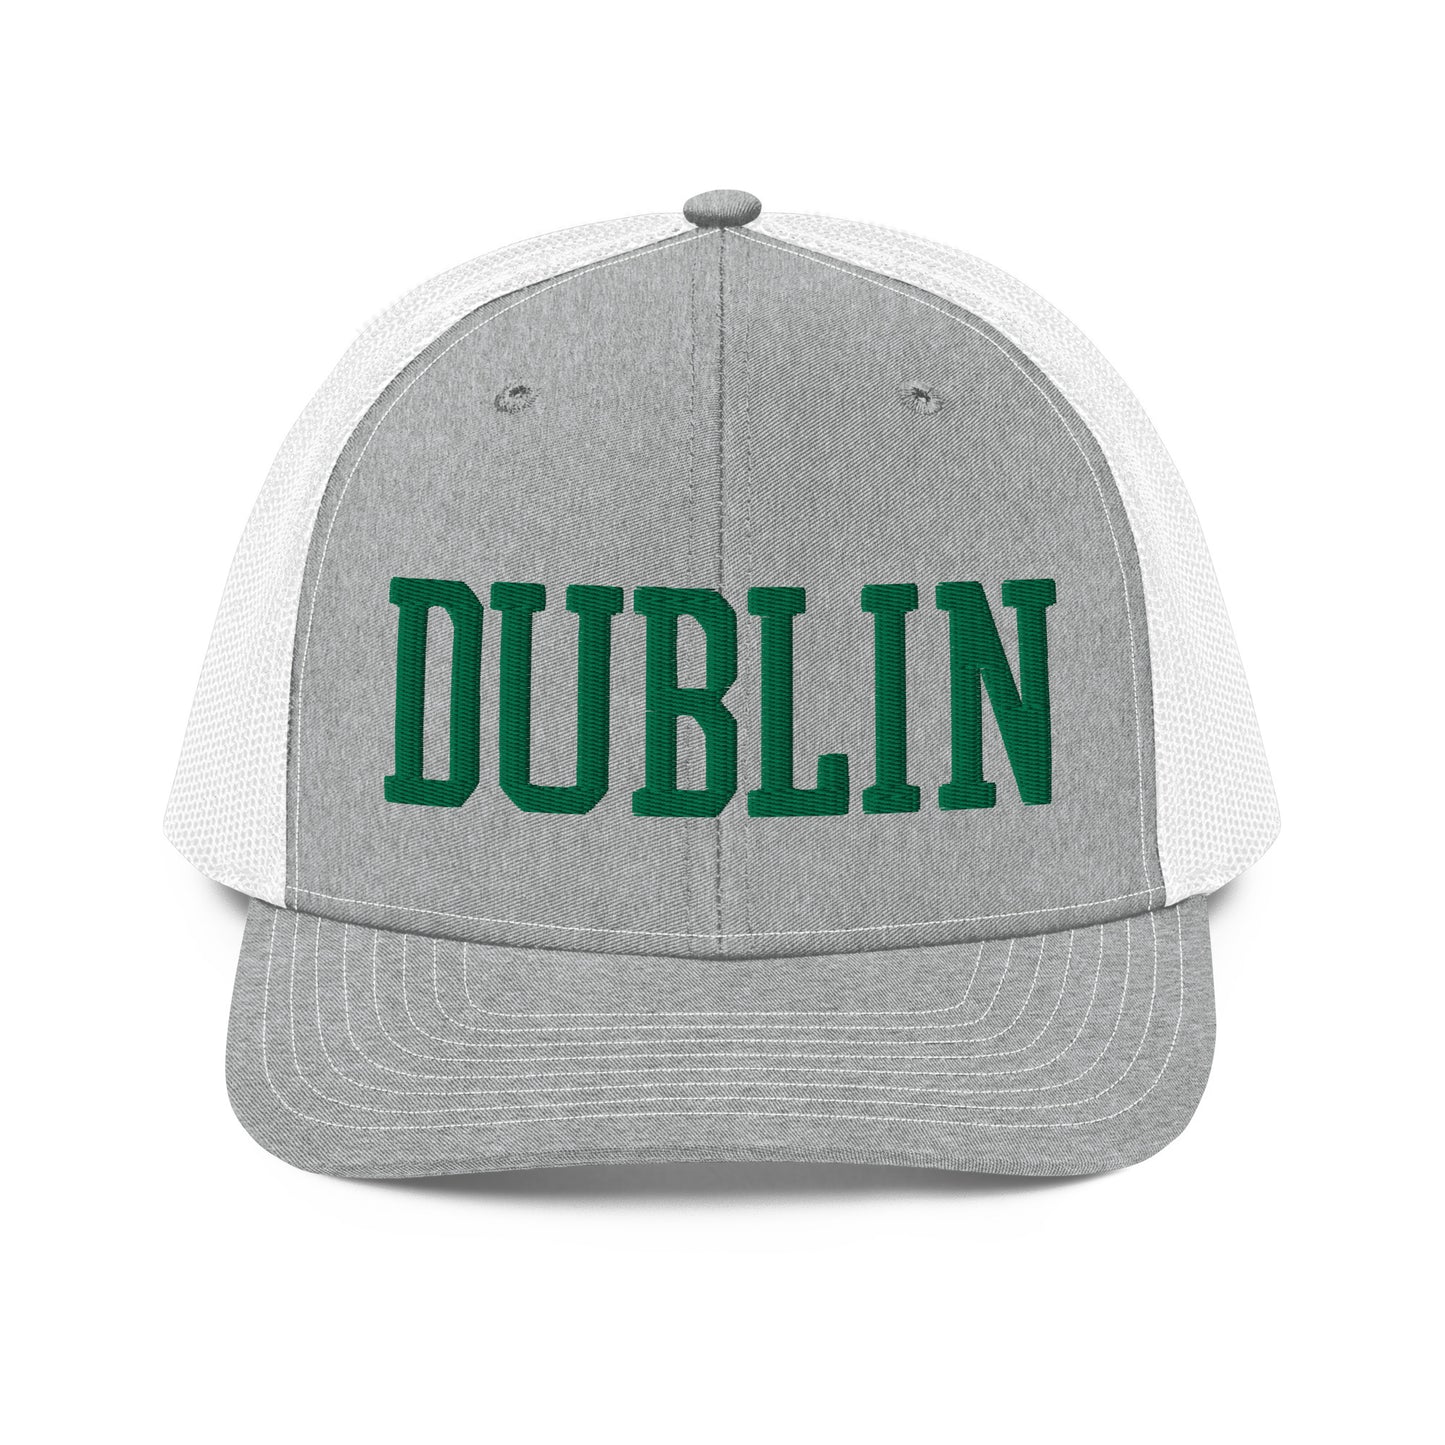 DUBLIN-Trucker Cap